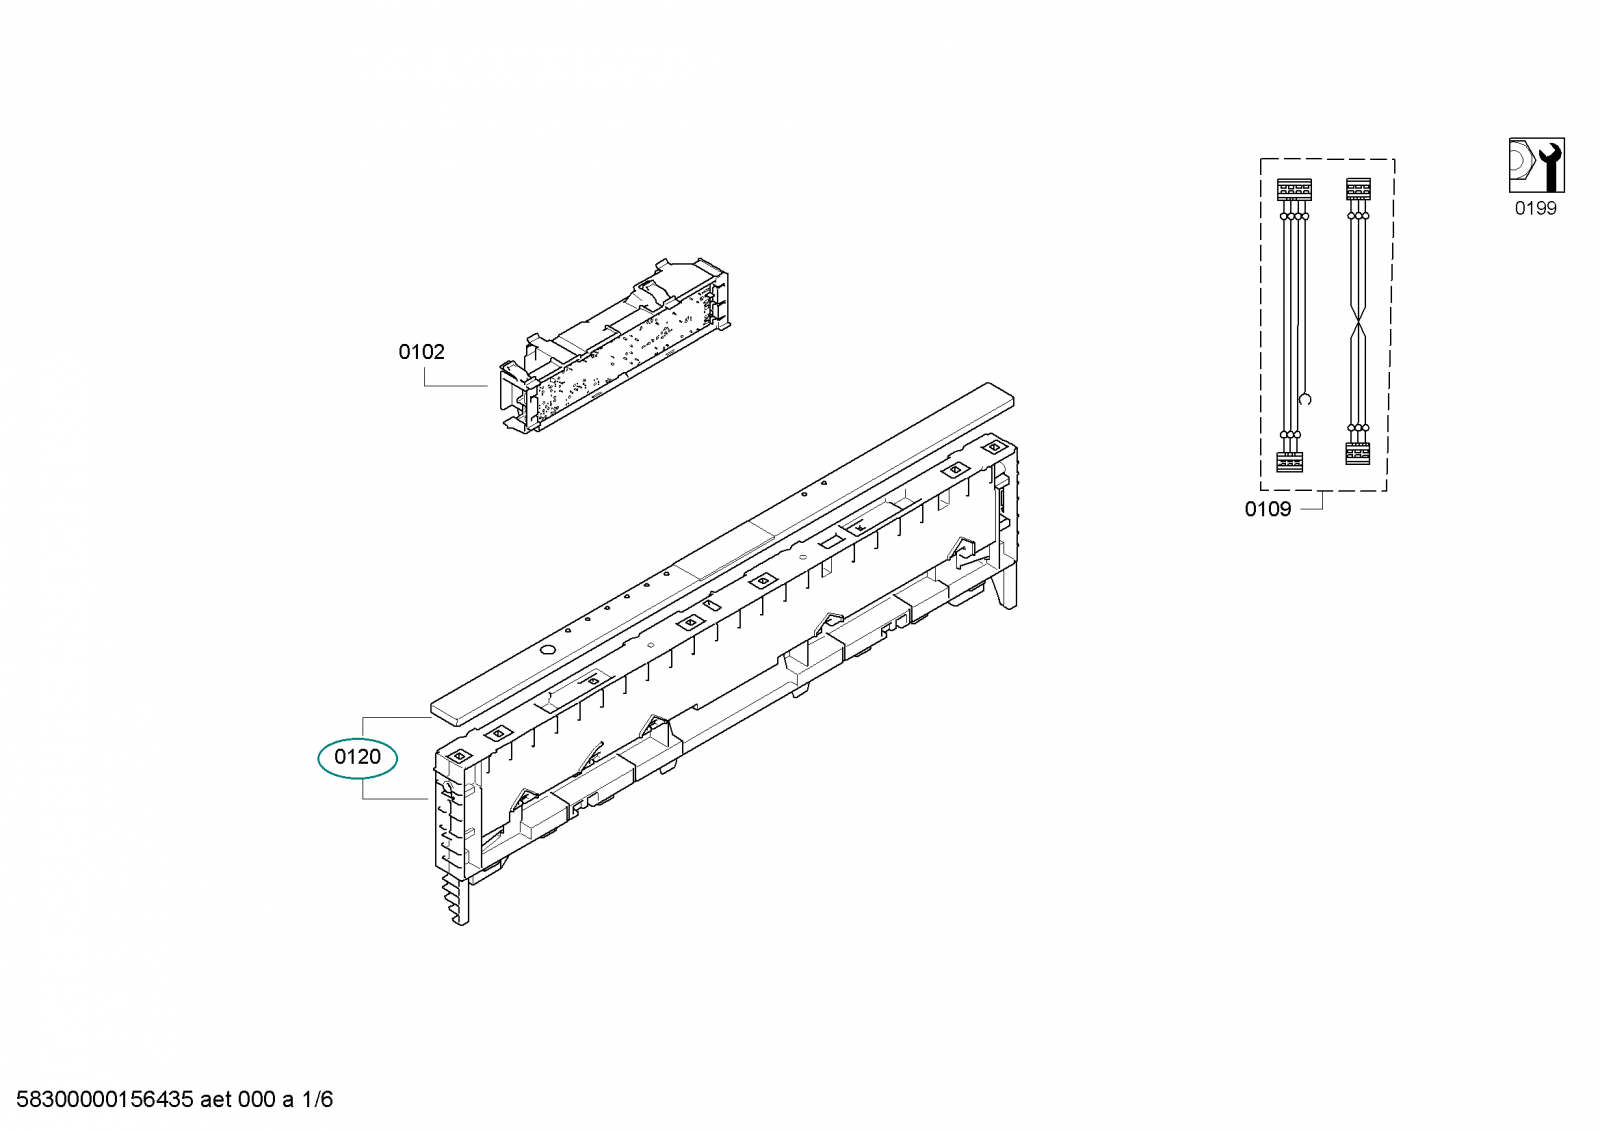 Stainless Panel Frame for Bosch Siemens Dishwashers - Part nr. BSH 00706763 BSH - Bosch / Siemens